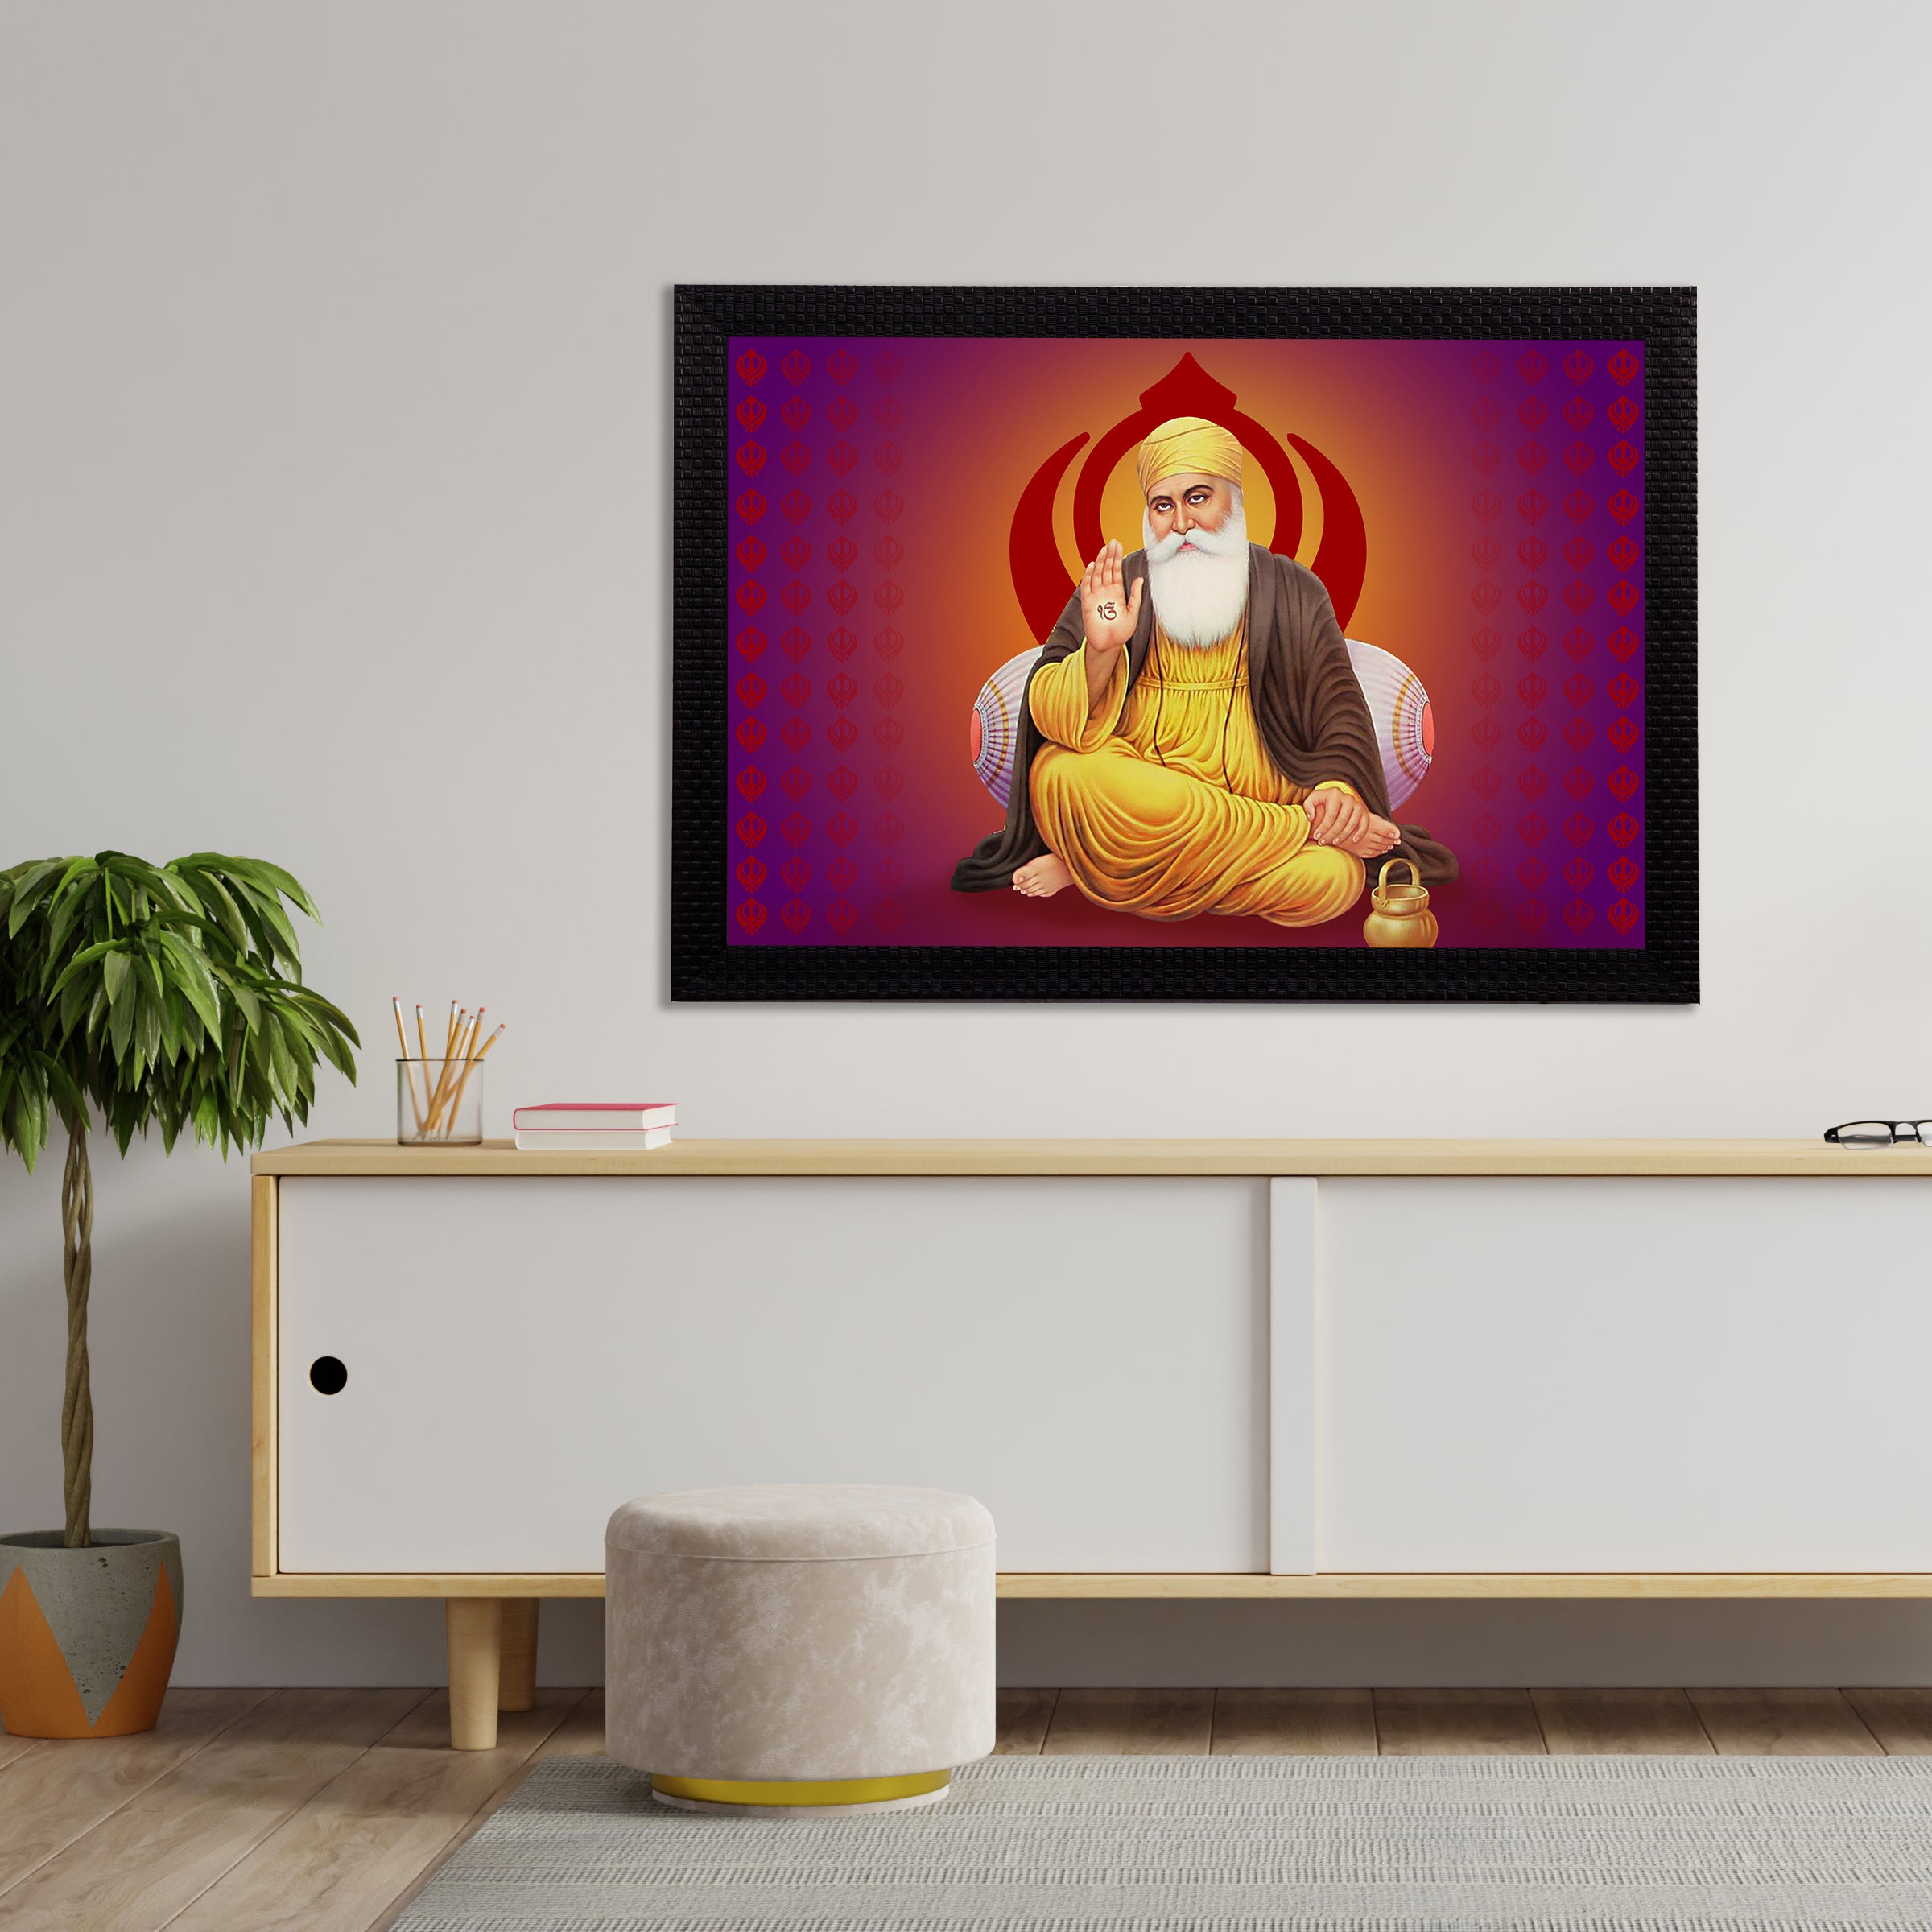 Shri Guru Nanak Dev Ji Painting Digital Printed Religious Wall Art 2